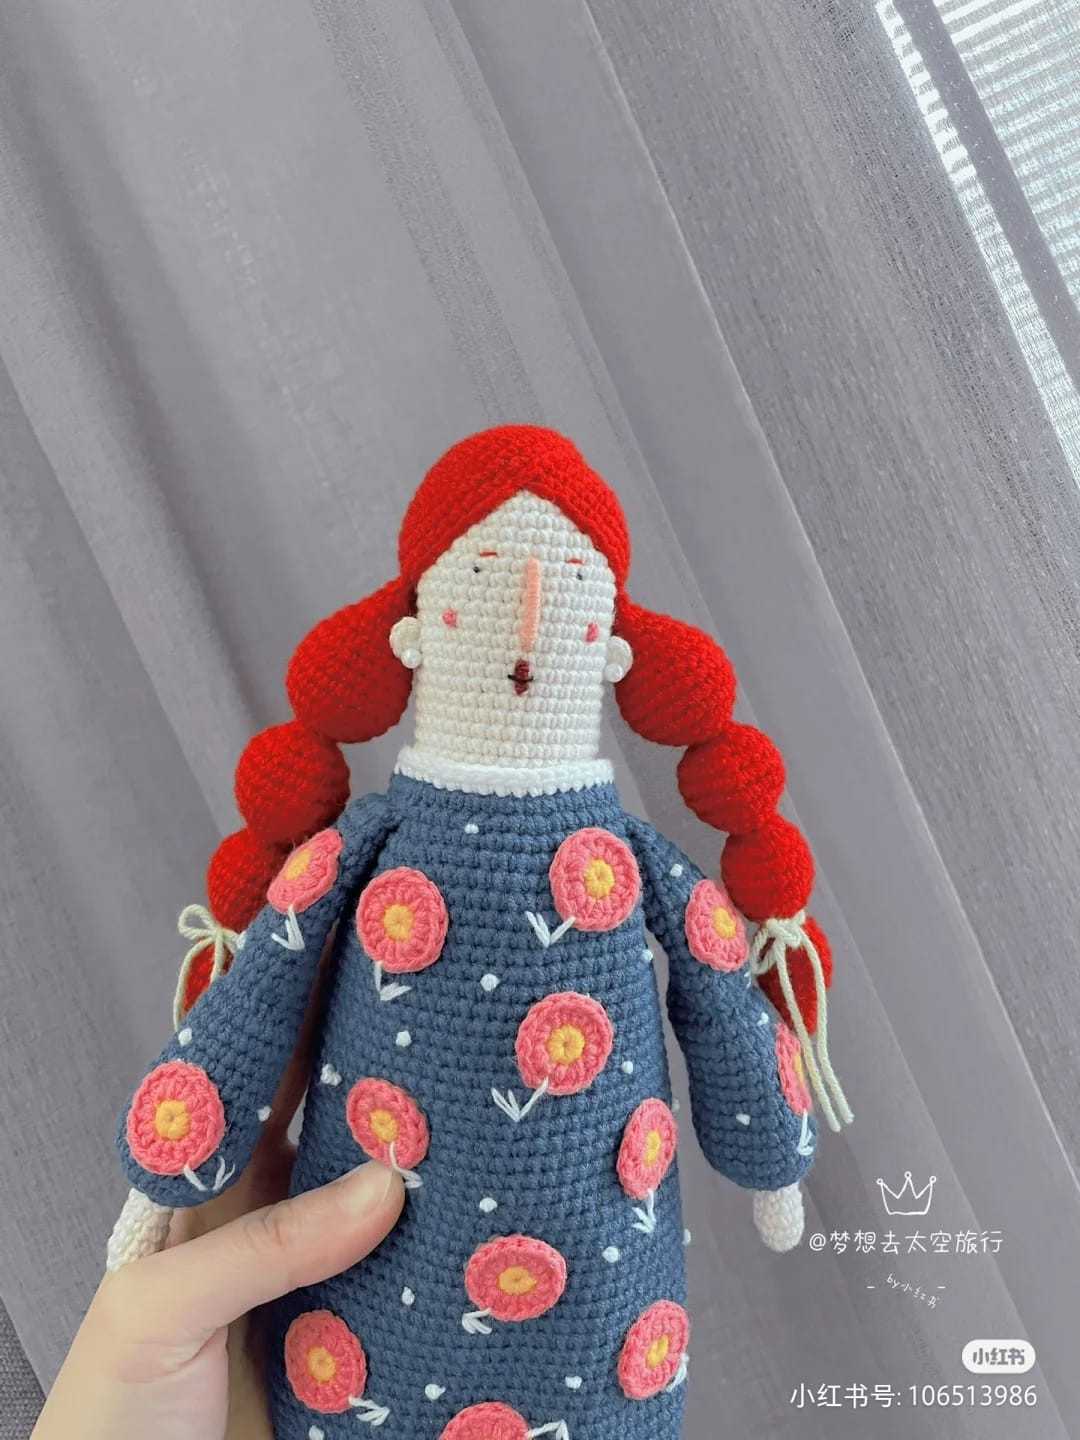 Crochet pattern red hair doll wearing green shirt